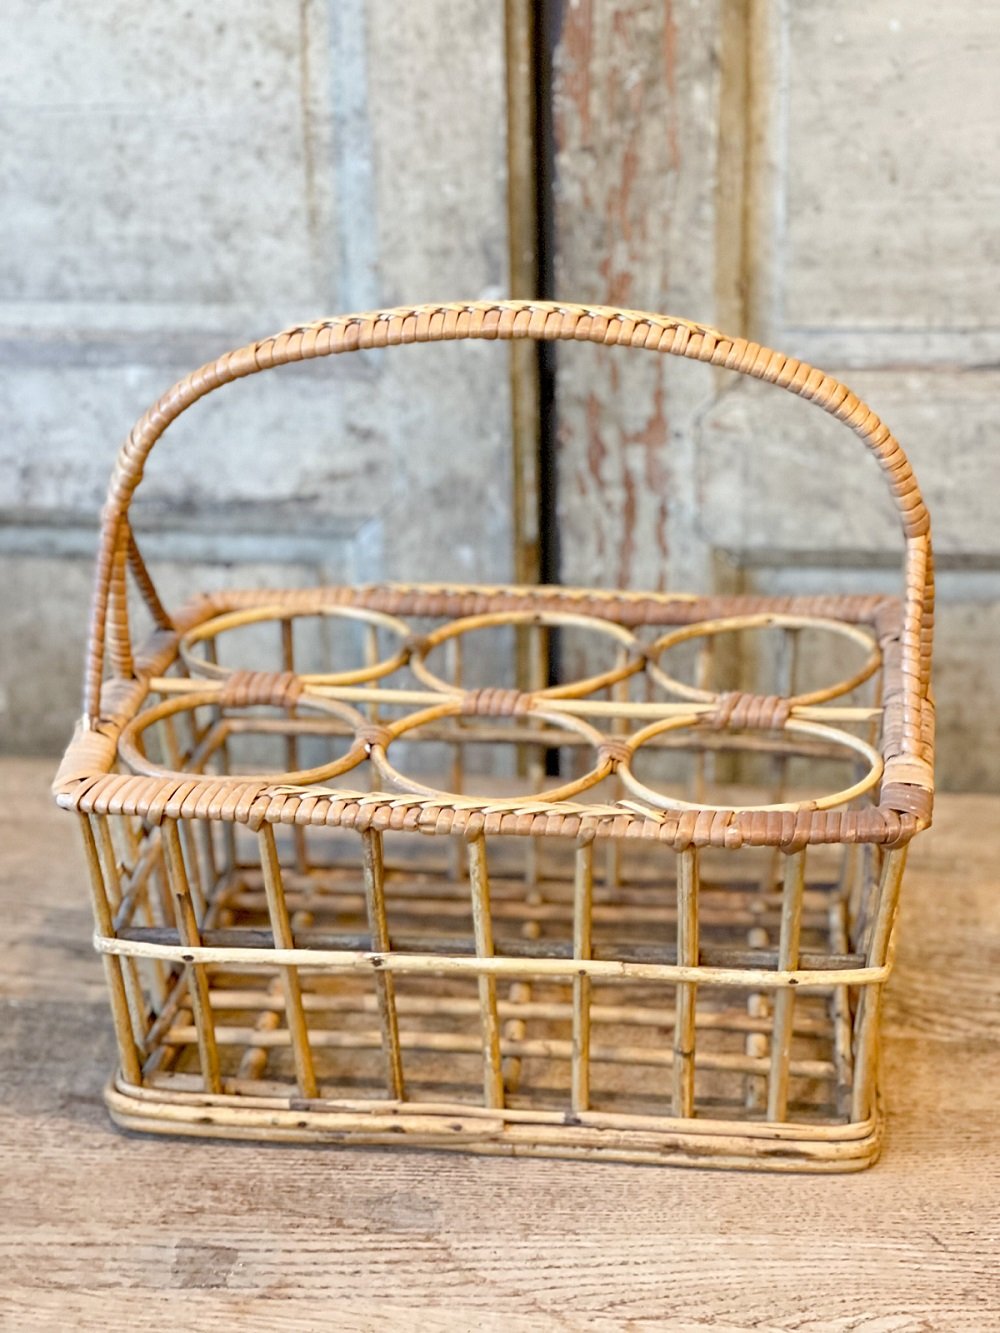 Vintage French Rattan Wicker Wine Bottle Carrier Caddy Basket